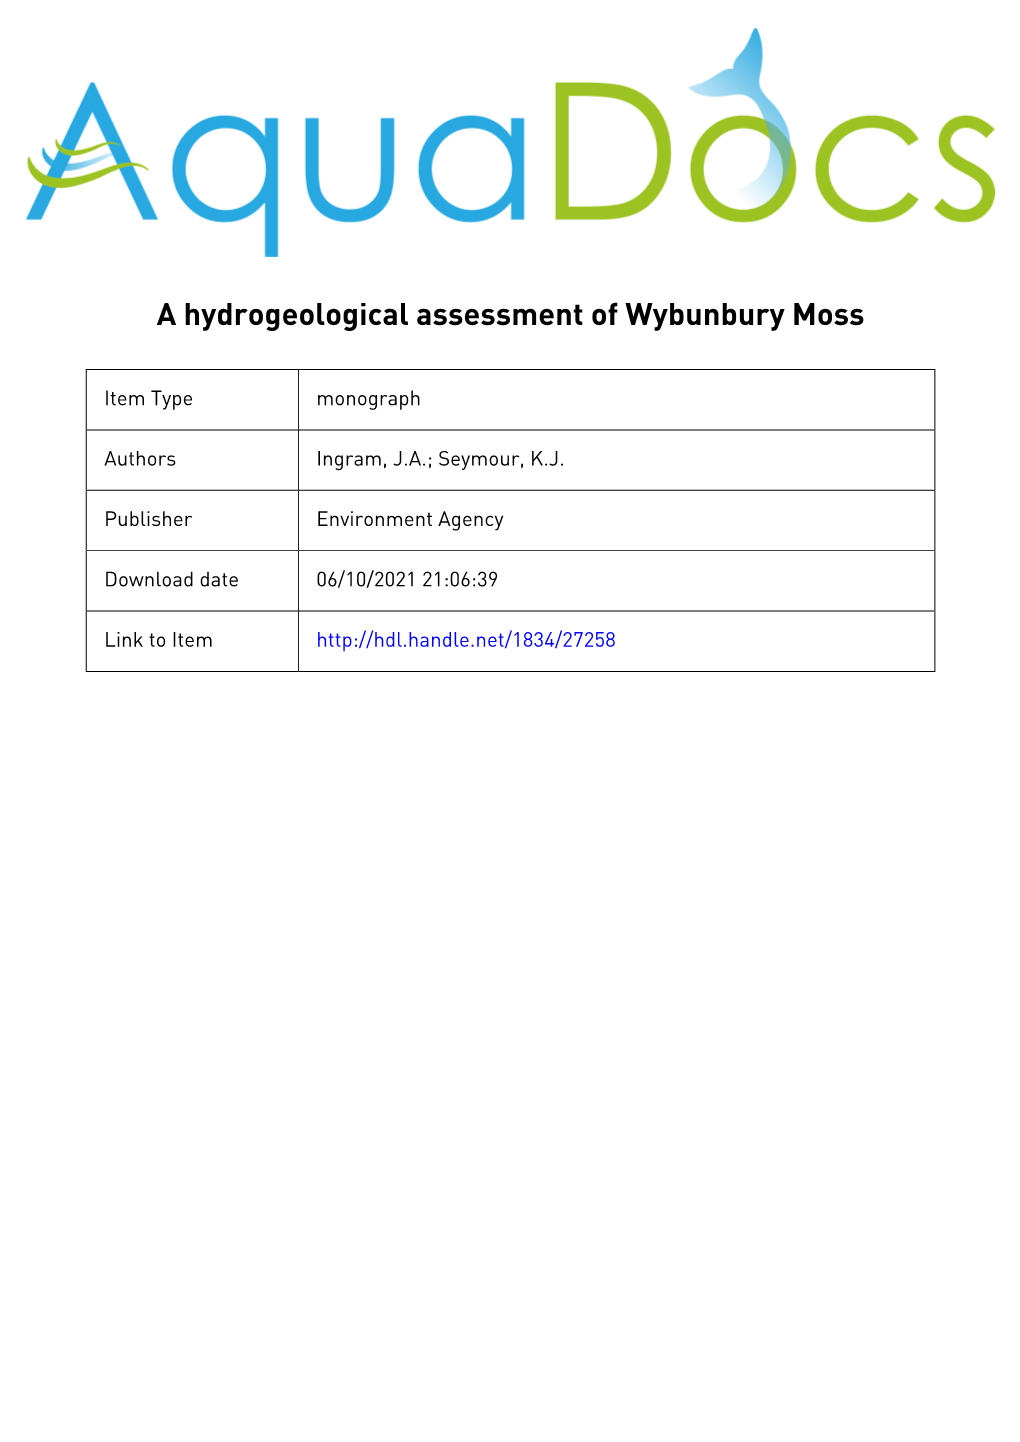 A Hydrogeological Assessment of Wybunbury Moss